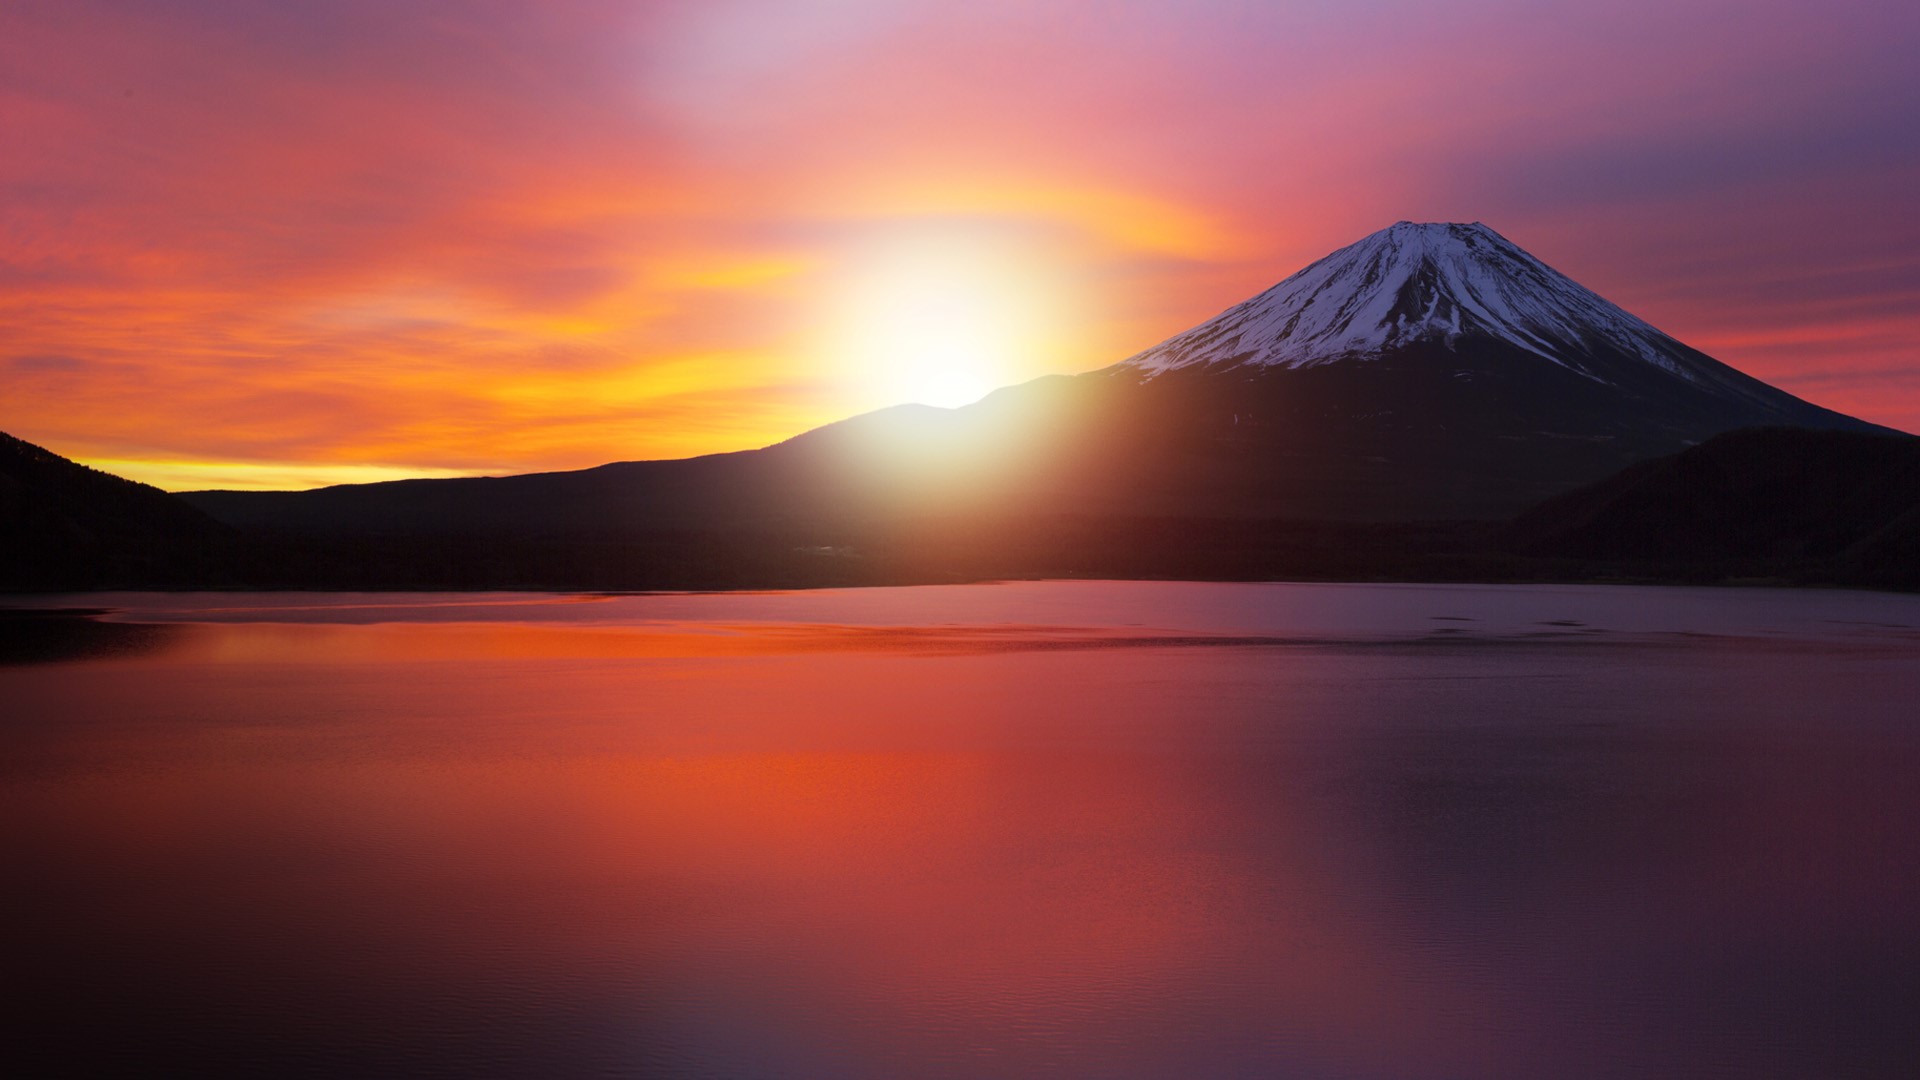  Mount  Fuji  at sunrise  Japan Windows 10 Spotlight Images